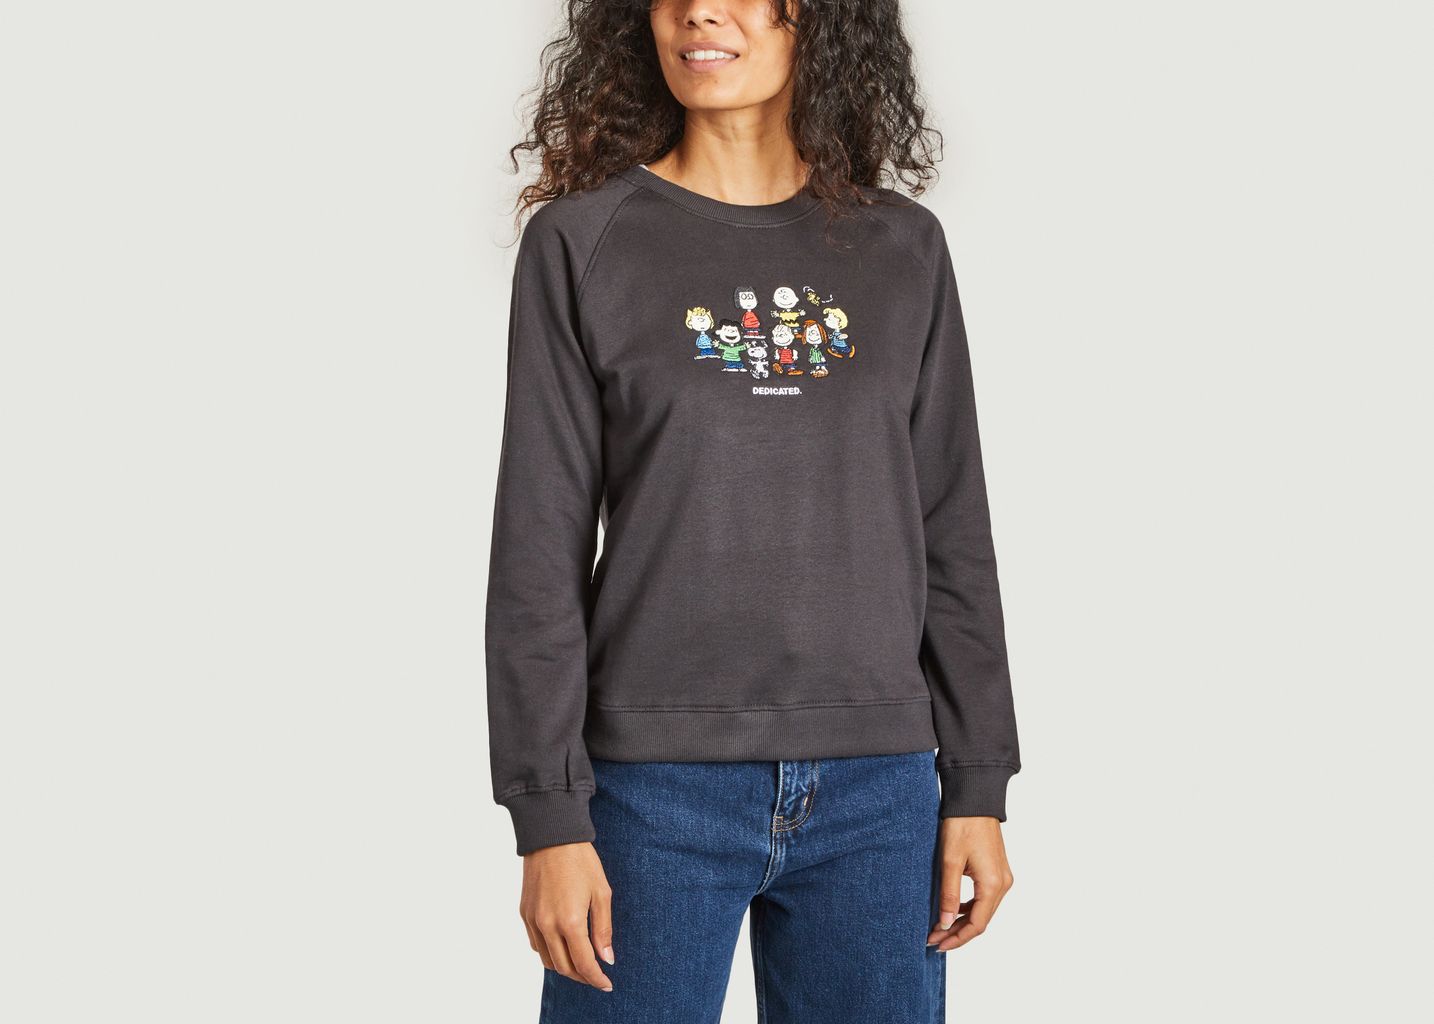 Ystad Peanuts Friends Dedicated Brand x Snoopy sweatshirt - Dedicated Brand